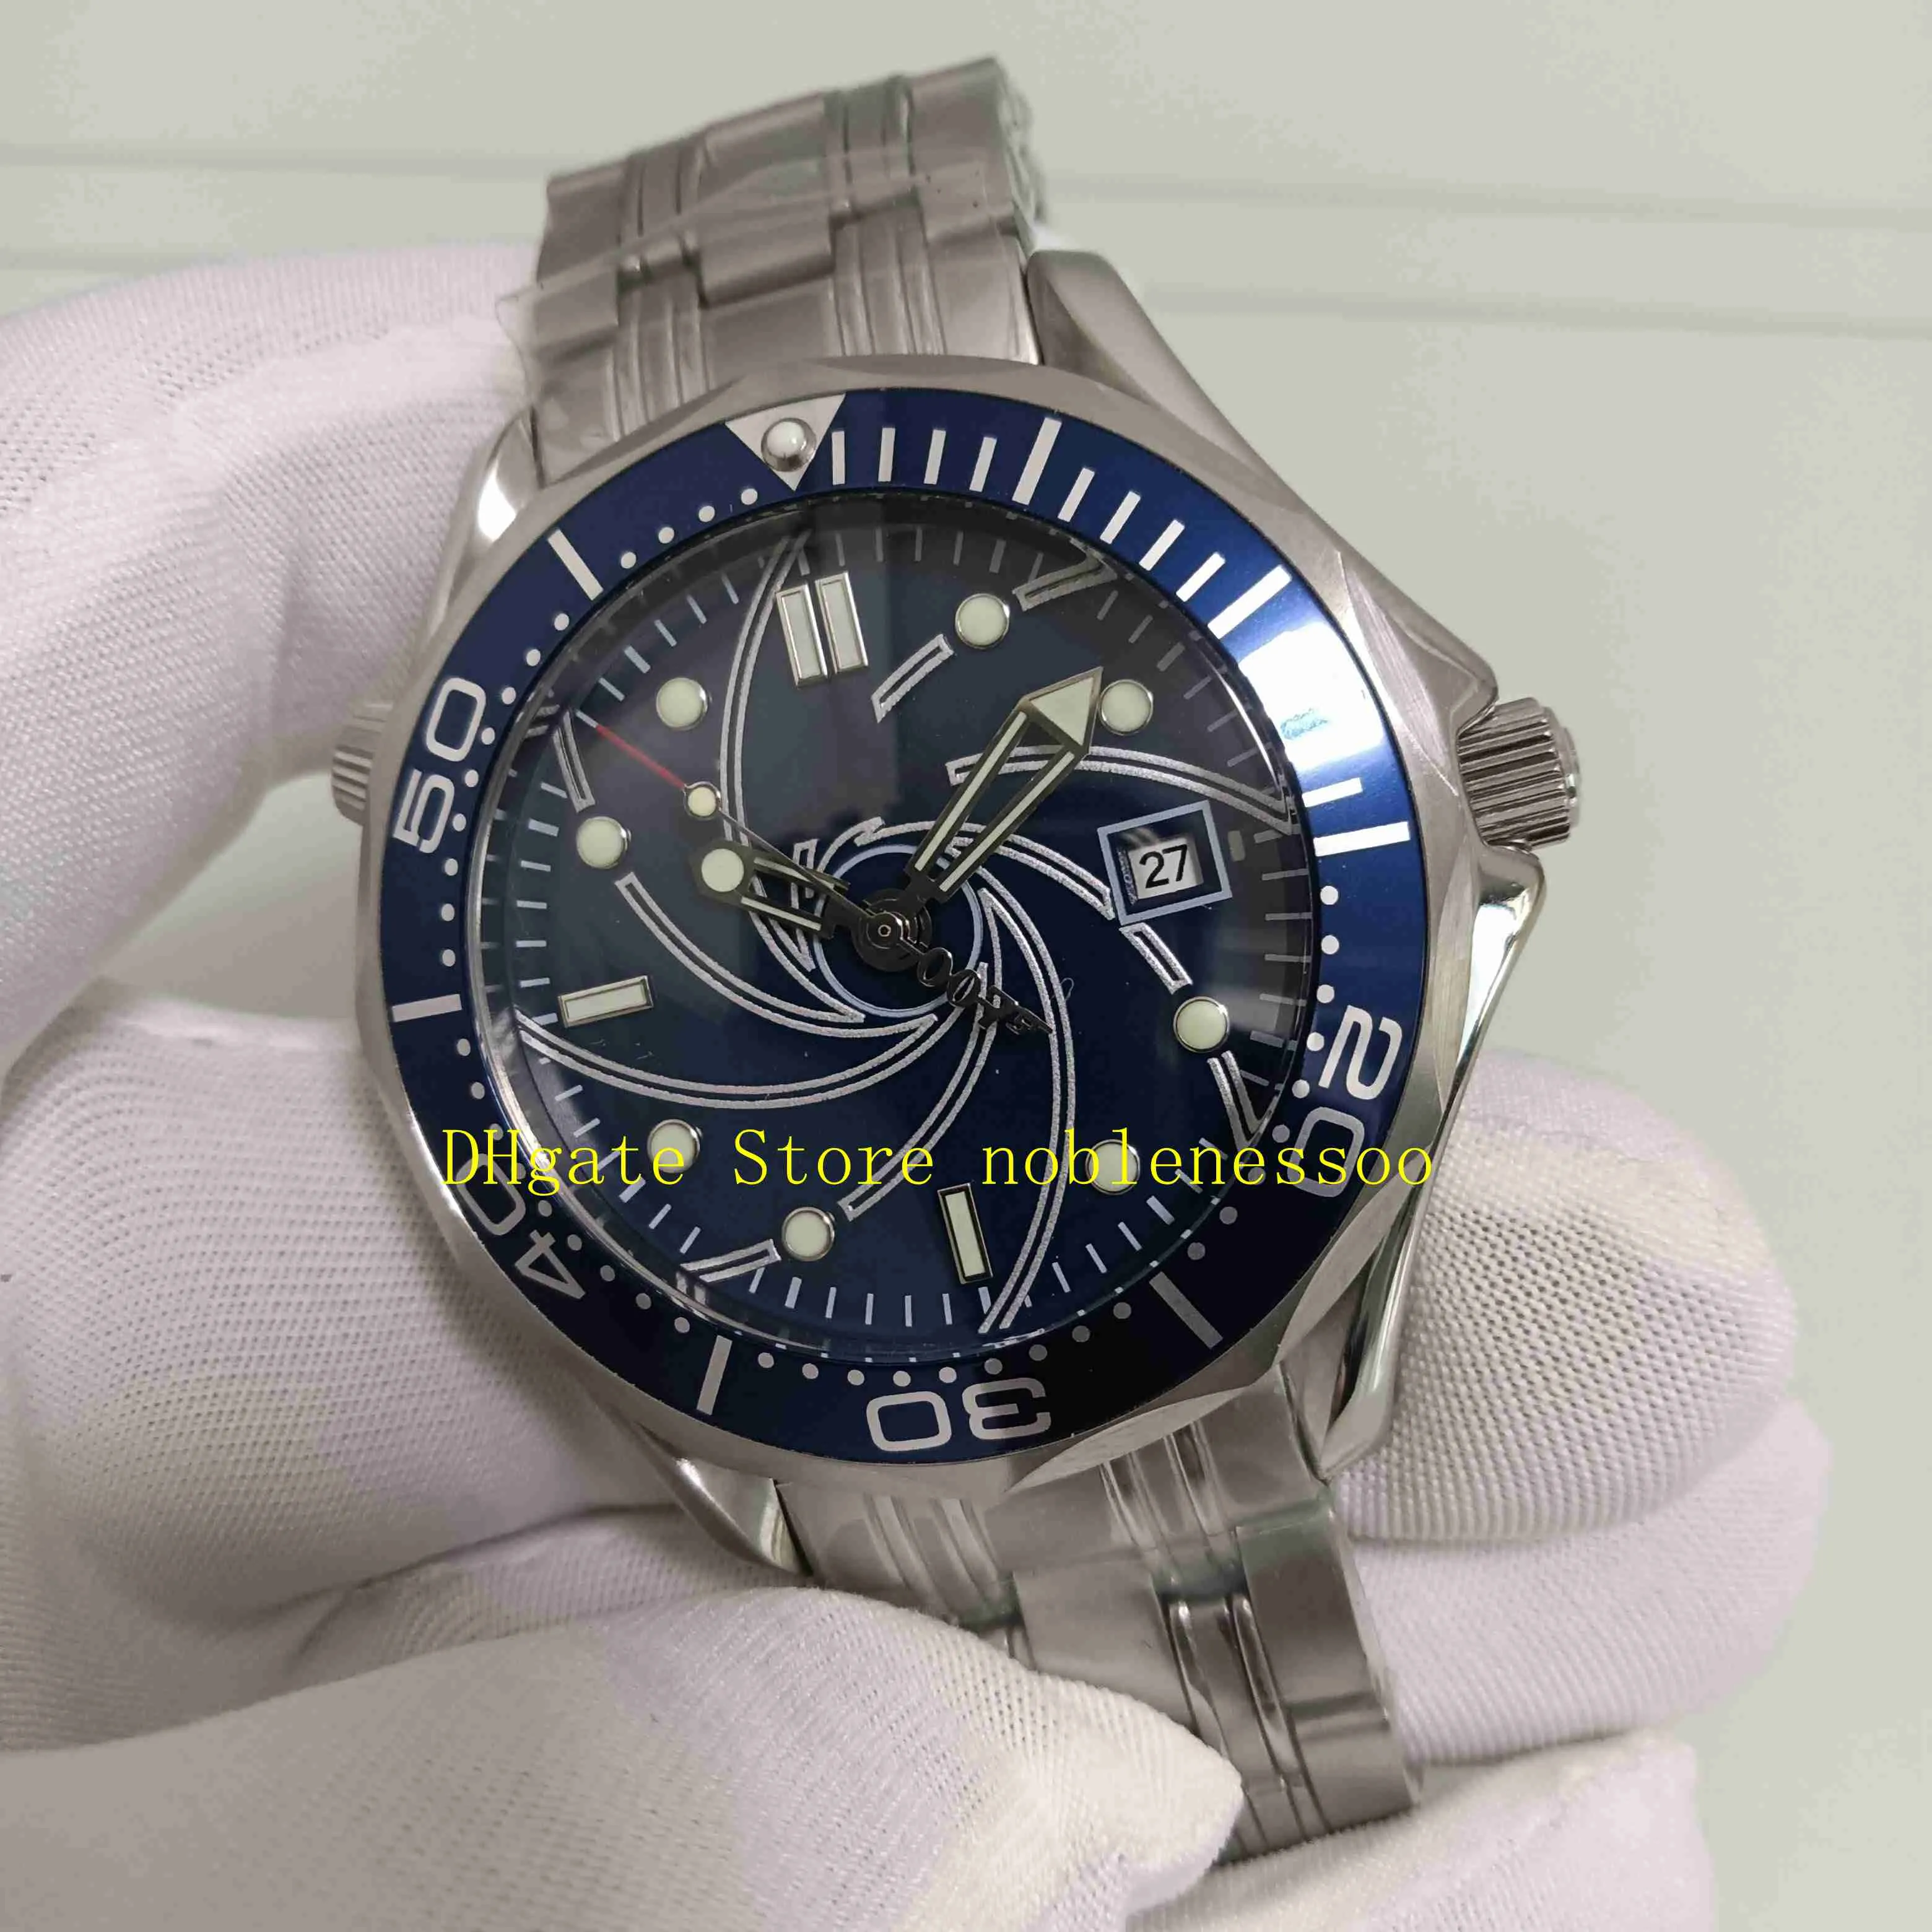 Real Po Men's James Bond 007 Automatic Watch Men Blue Dial Stainless Steel Casino Royale Limited Edition 41mm Bracelet Mec194P